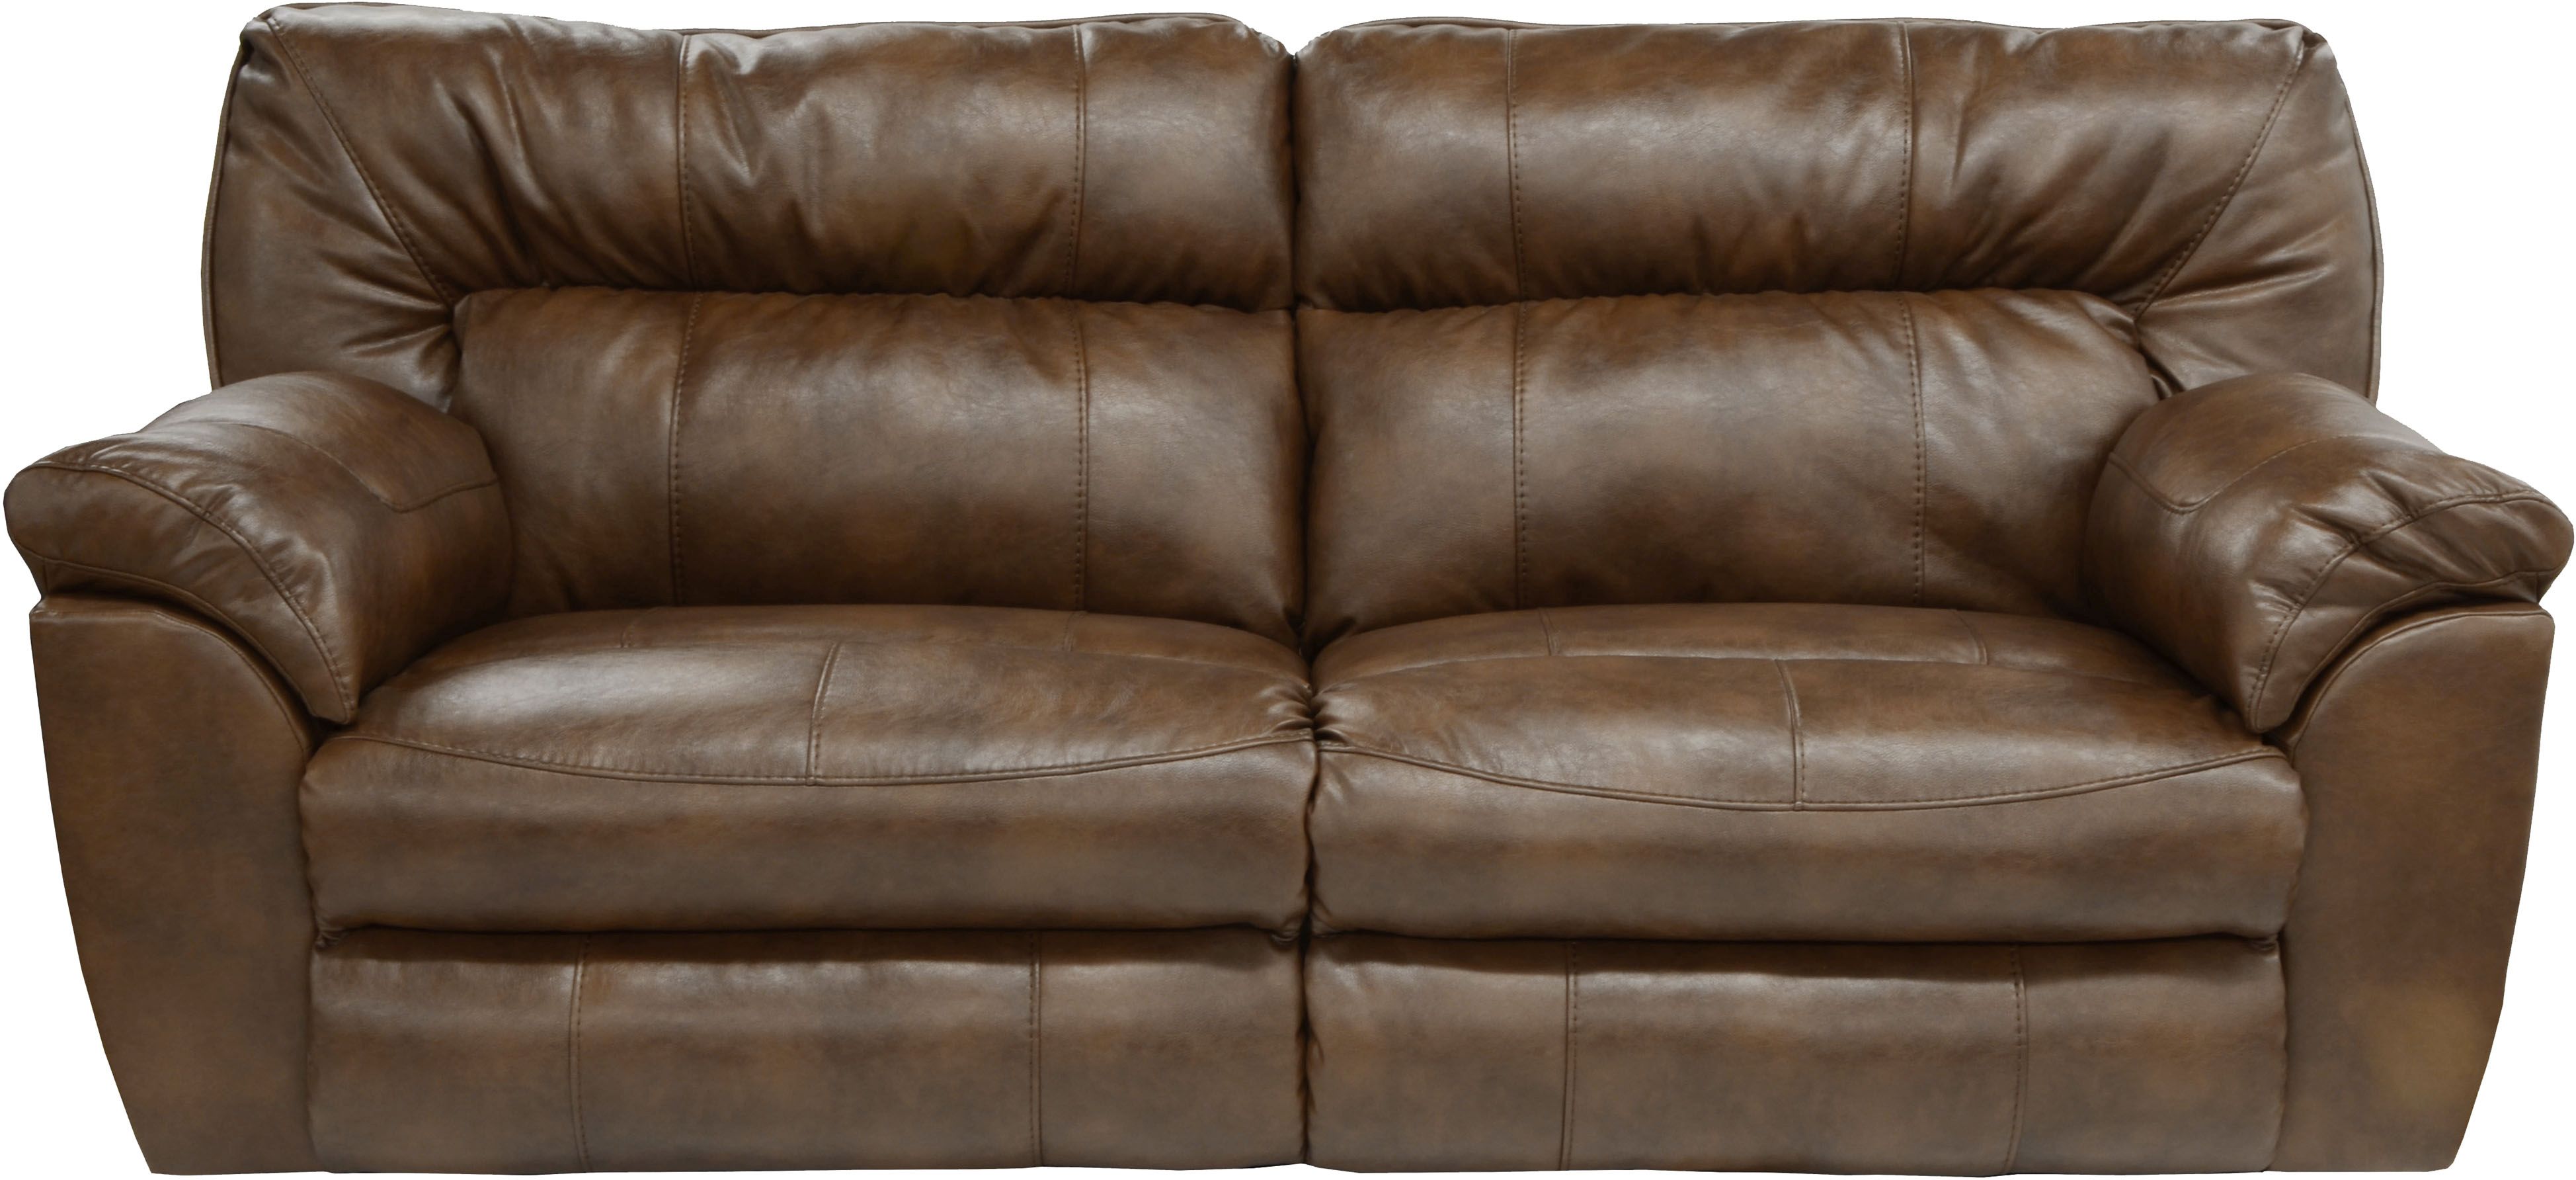 iAmerica Nolan Extra Wide Reclining Sofa